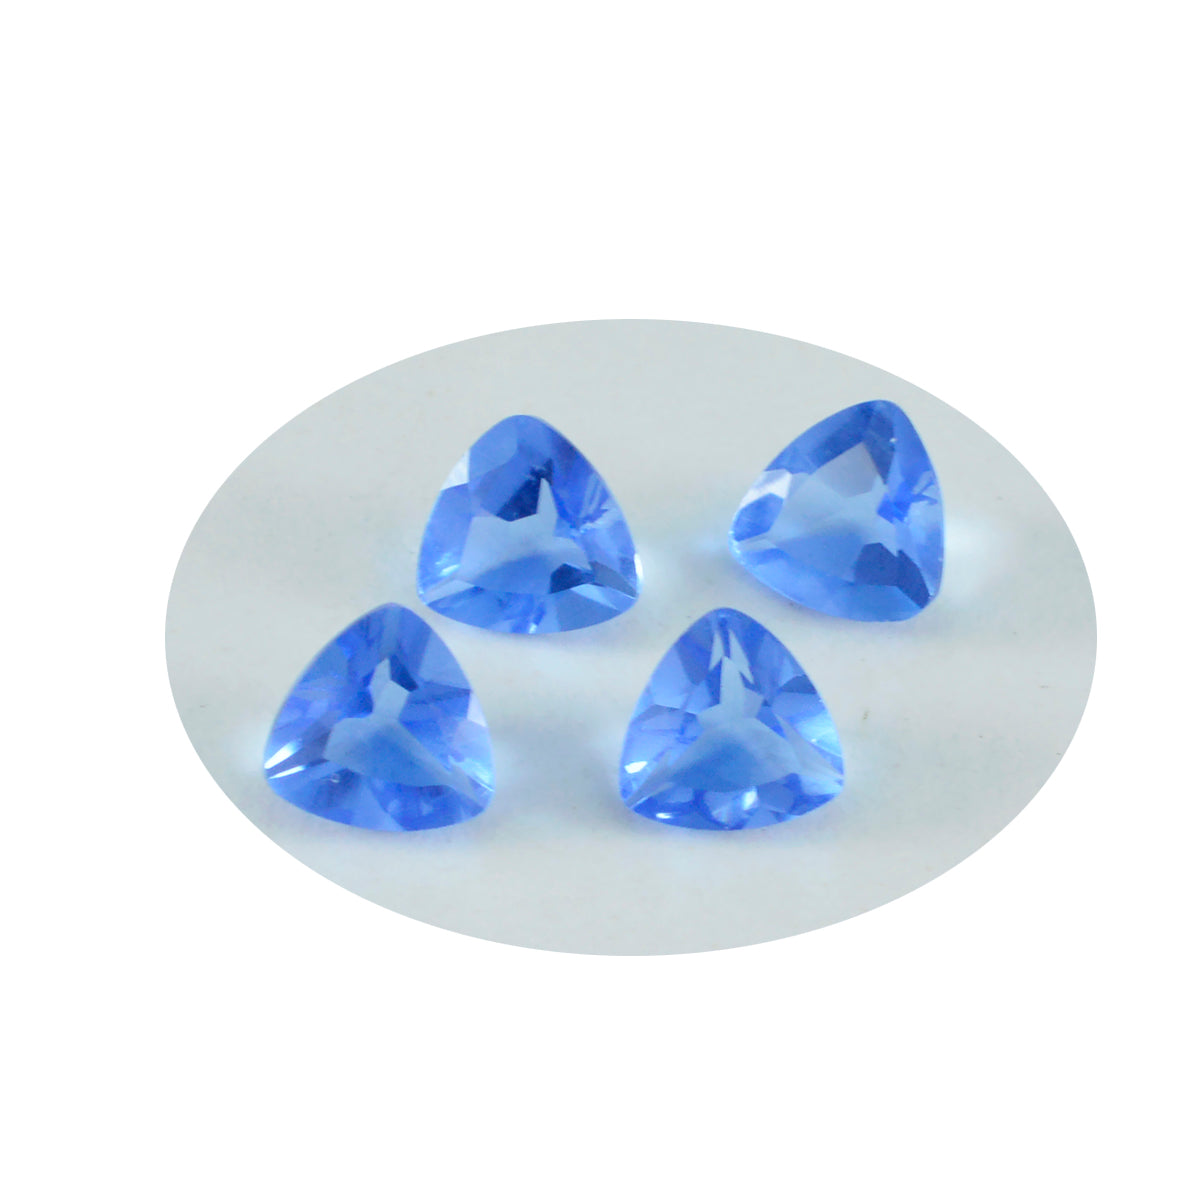 Riyogems 1PC Blue Sapphire CZ Faceted 9x9 mm Trillion Shape sweet Quality Gem